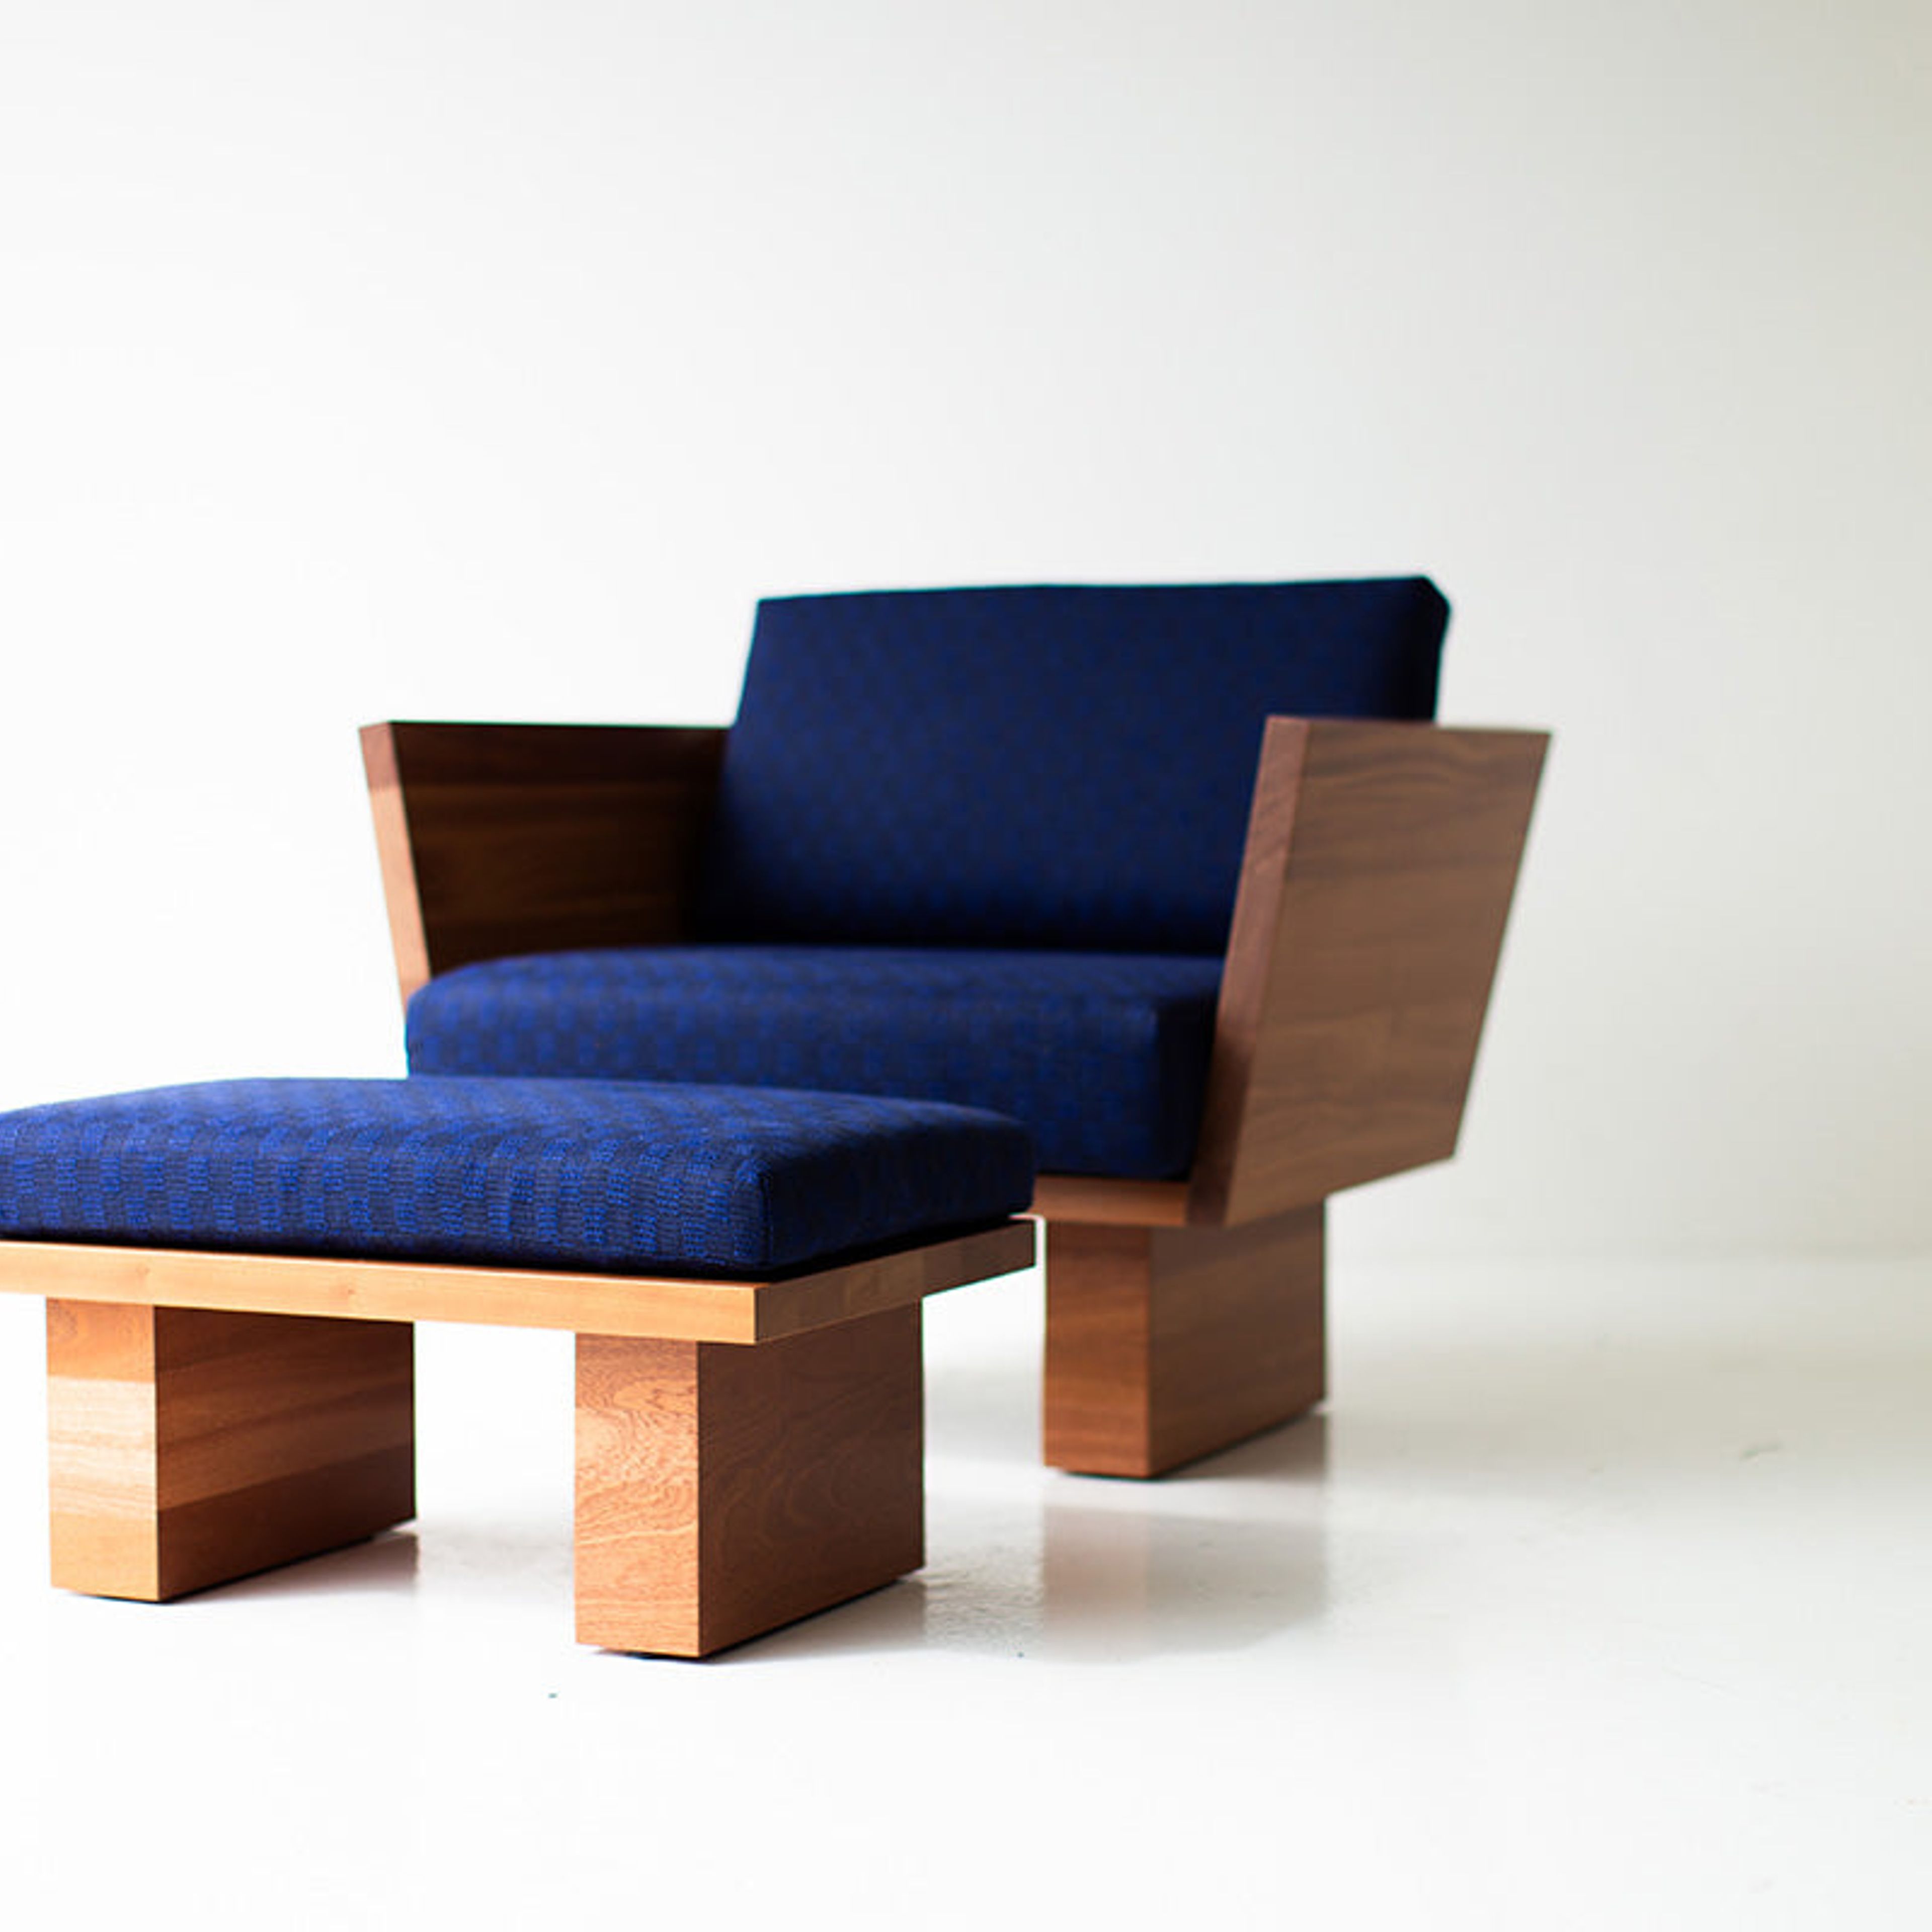 Modern Patio Furniture - The Suelo Ottoman - 5623